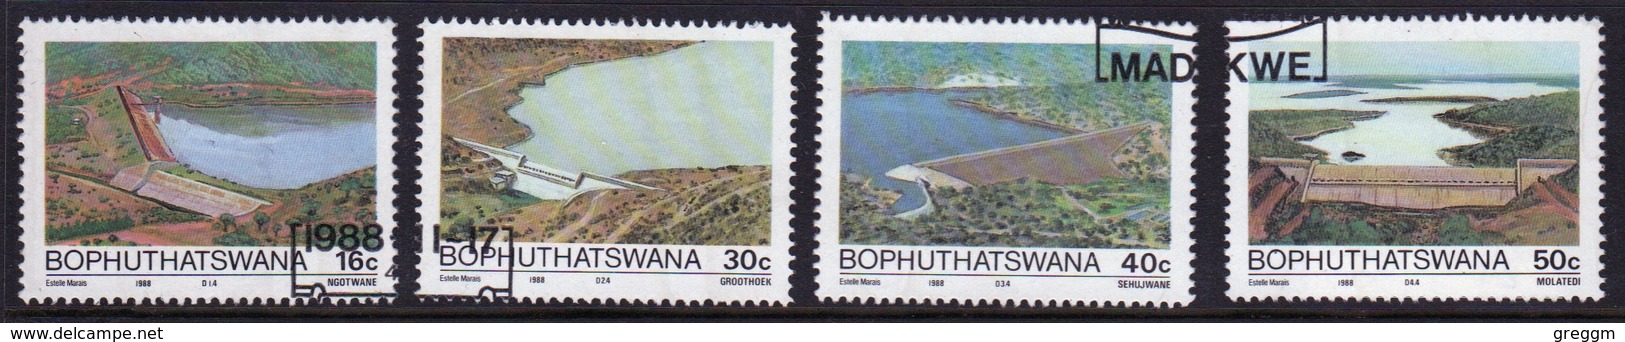 Bophuthatswana Set Of Stamps Celebrating Dams  From 1988. - Bophuthatswana